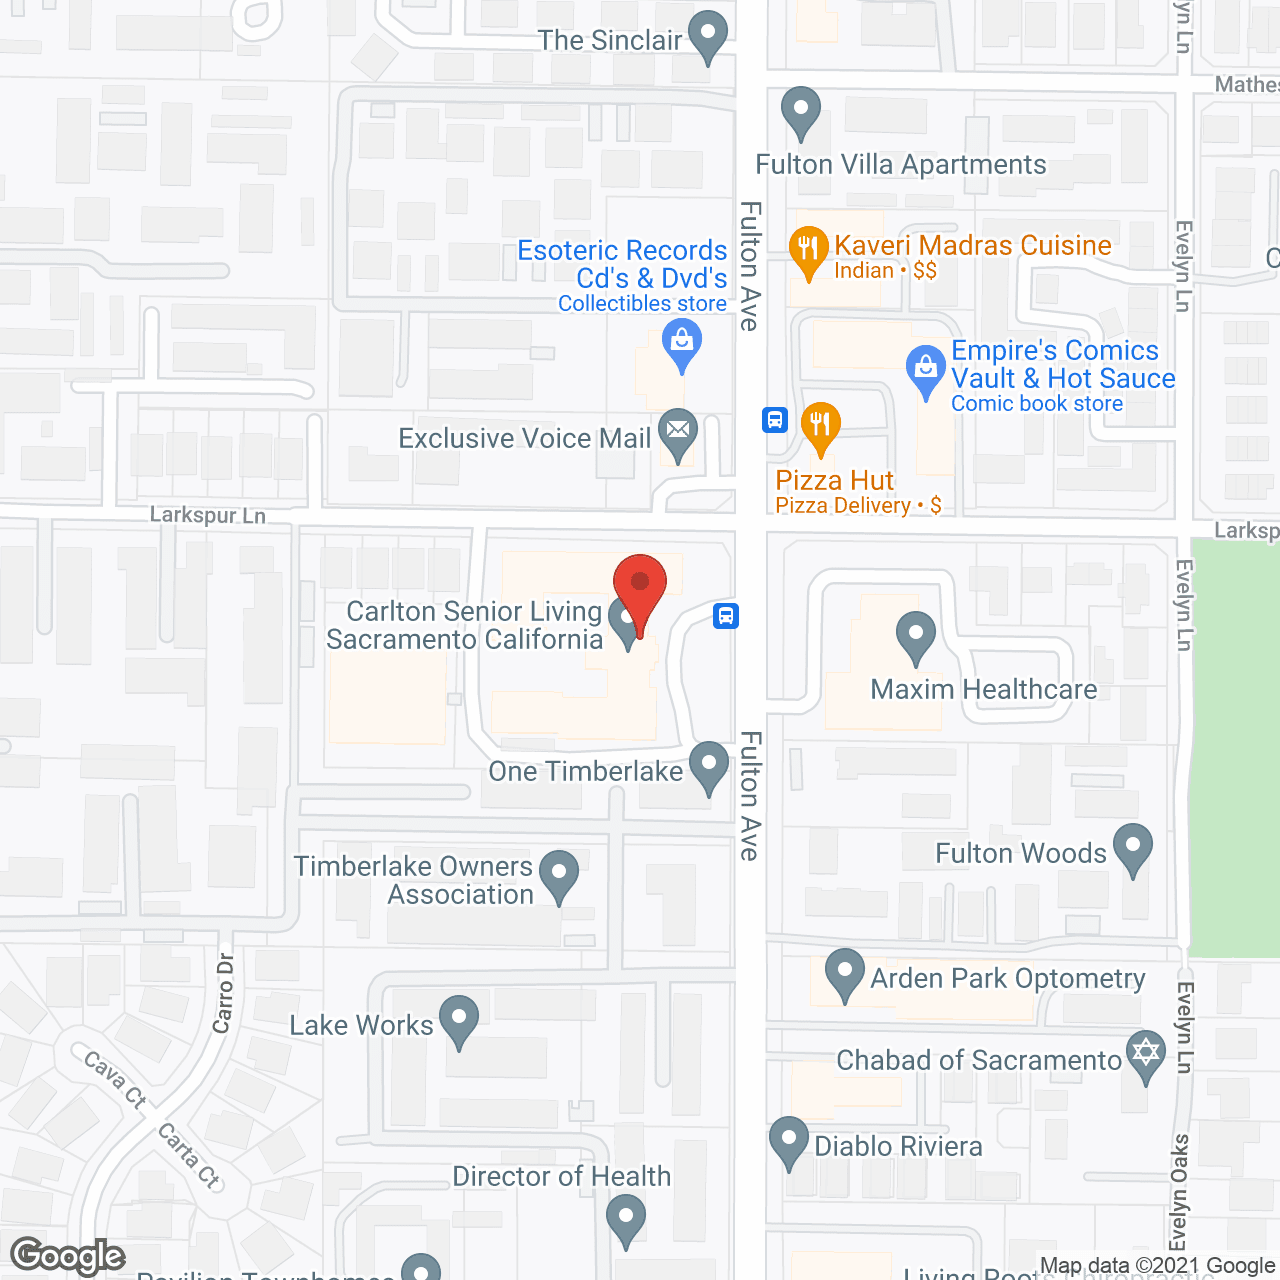 Crown Plaza of Sacramento in google map